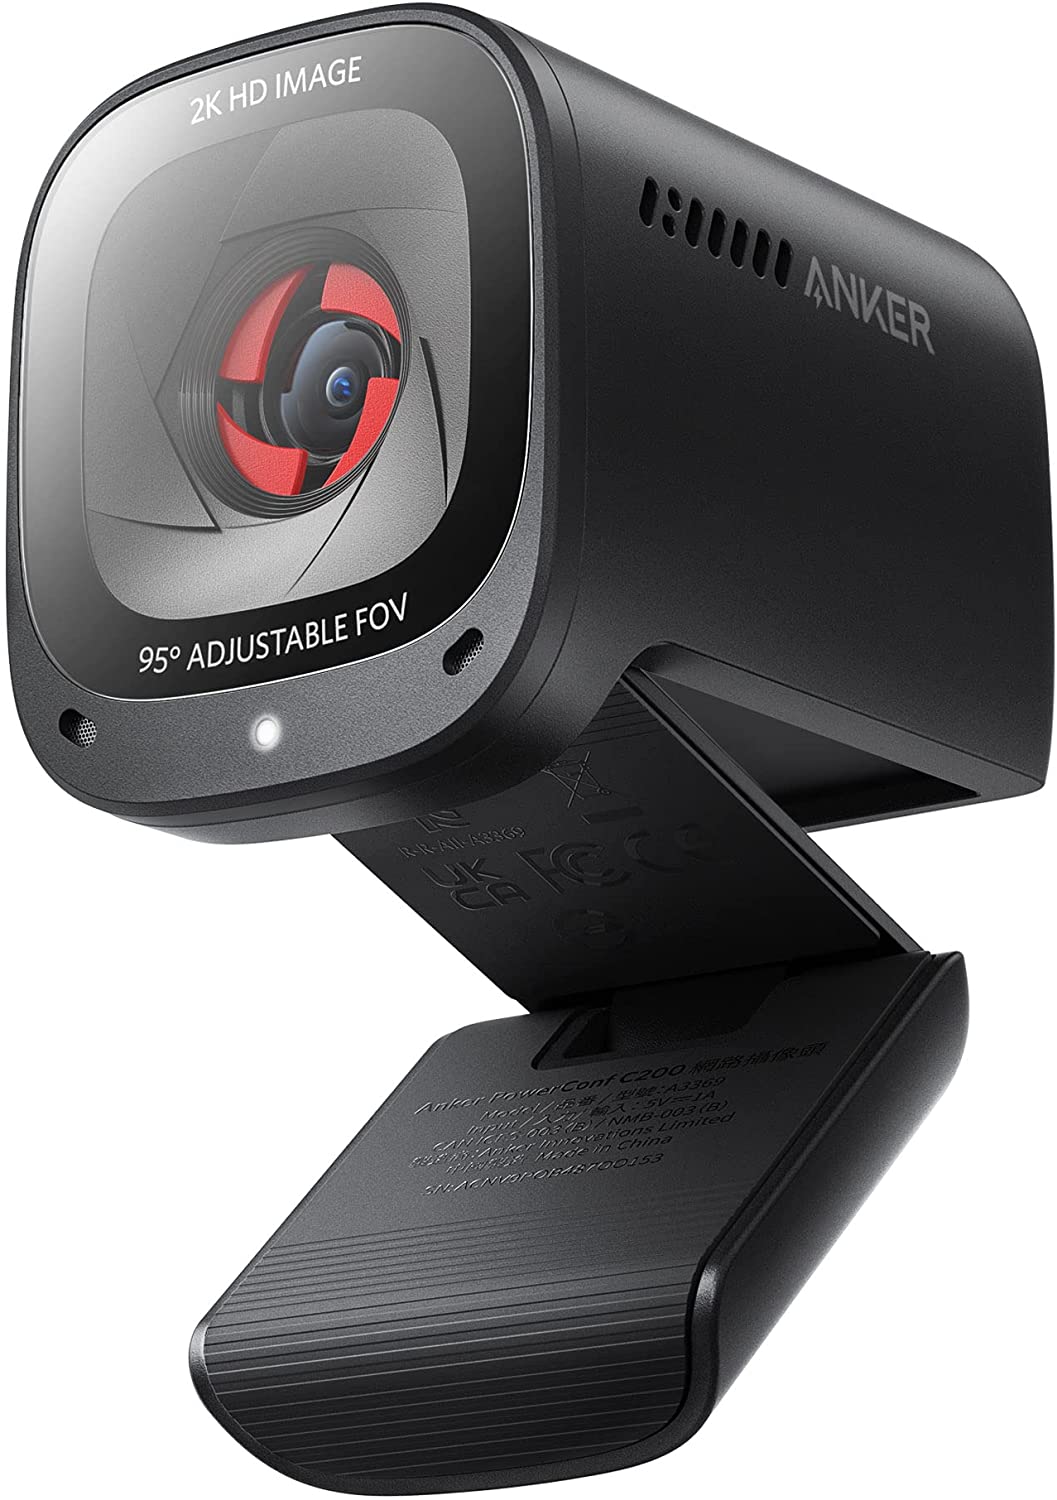 Anker PowerConf C200 2K USB Webcam, Webcam for Laptop $59.99 + FS